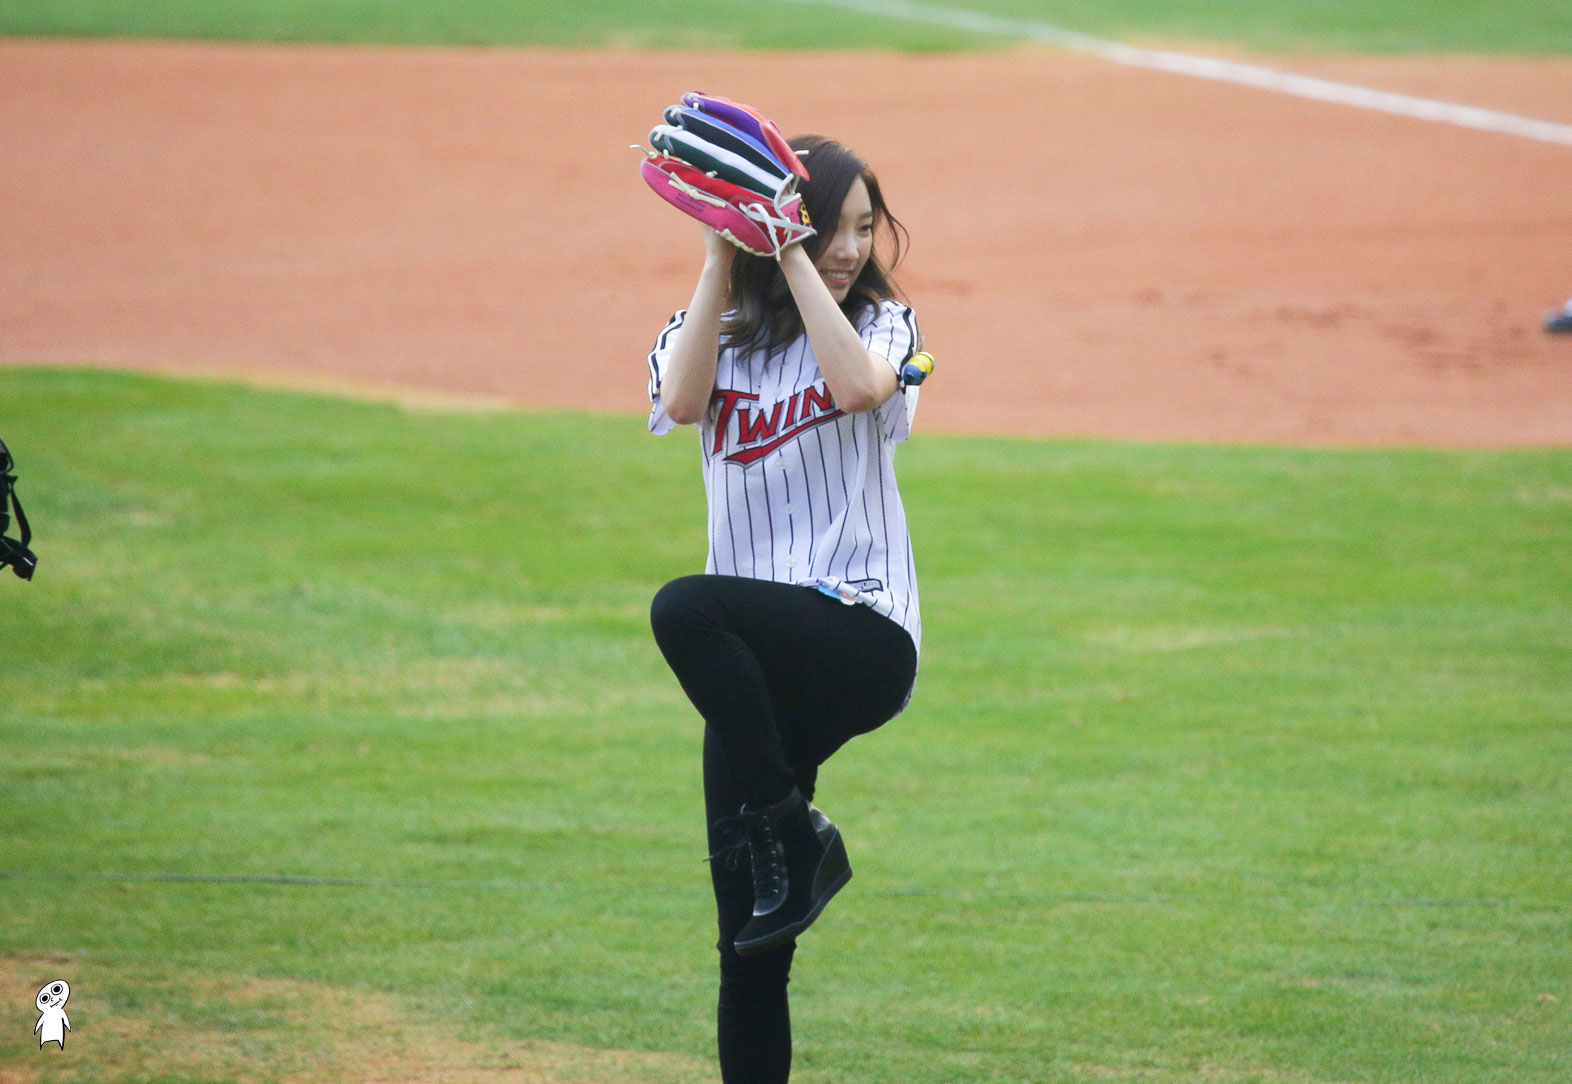 Girls Generation Taeyeon first pitch